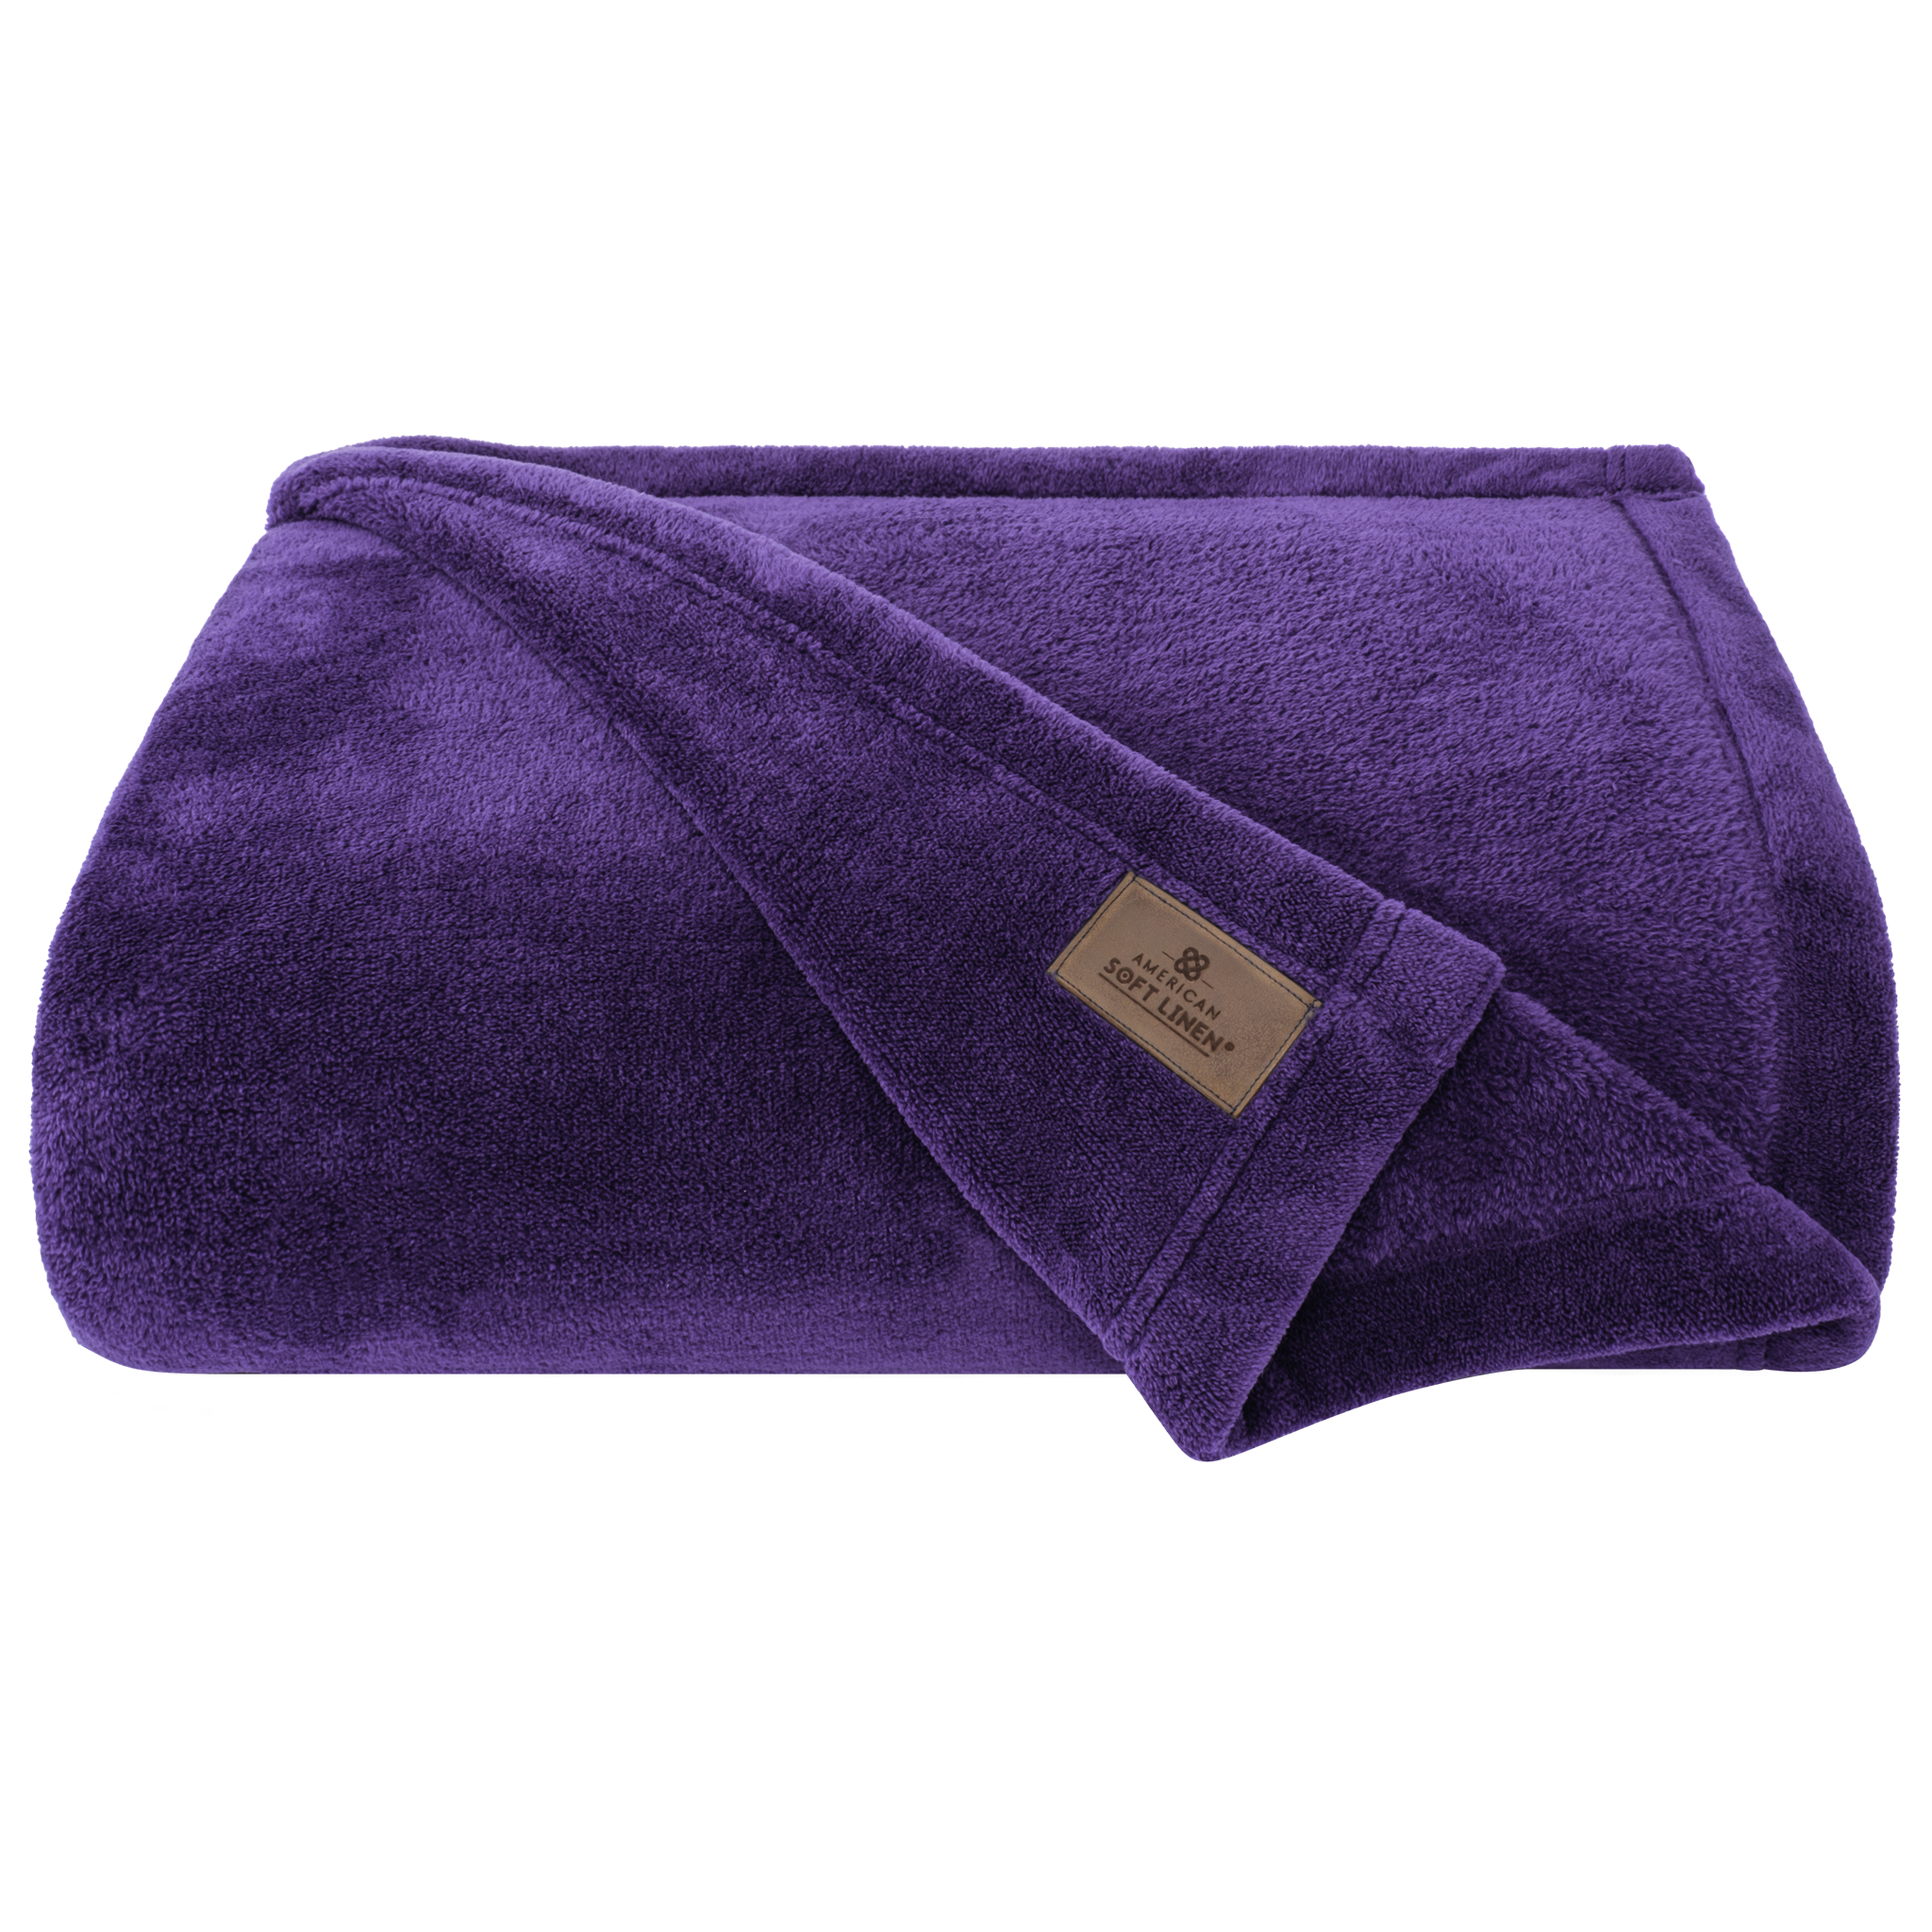 American Soft Linen - Bedding Fleece Blanket - Wholesale - 9 Set Case Pack - Queen Size 85x90 inches - Purple - 3